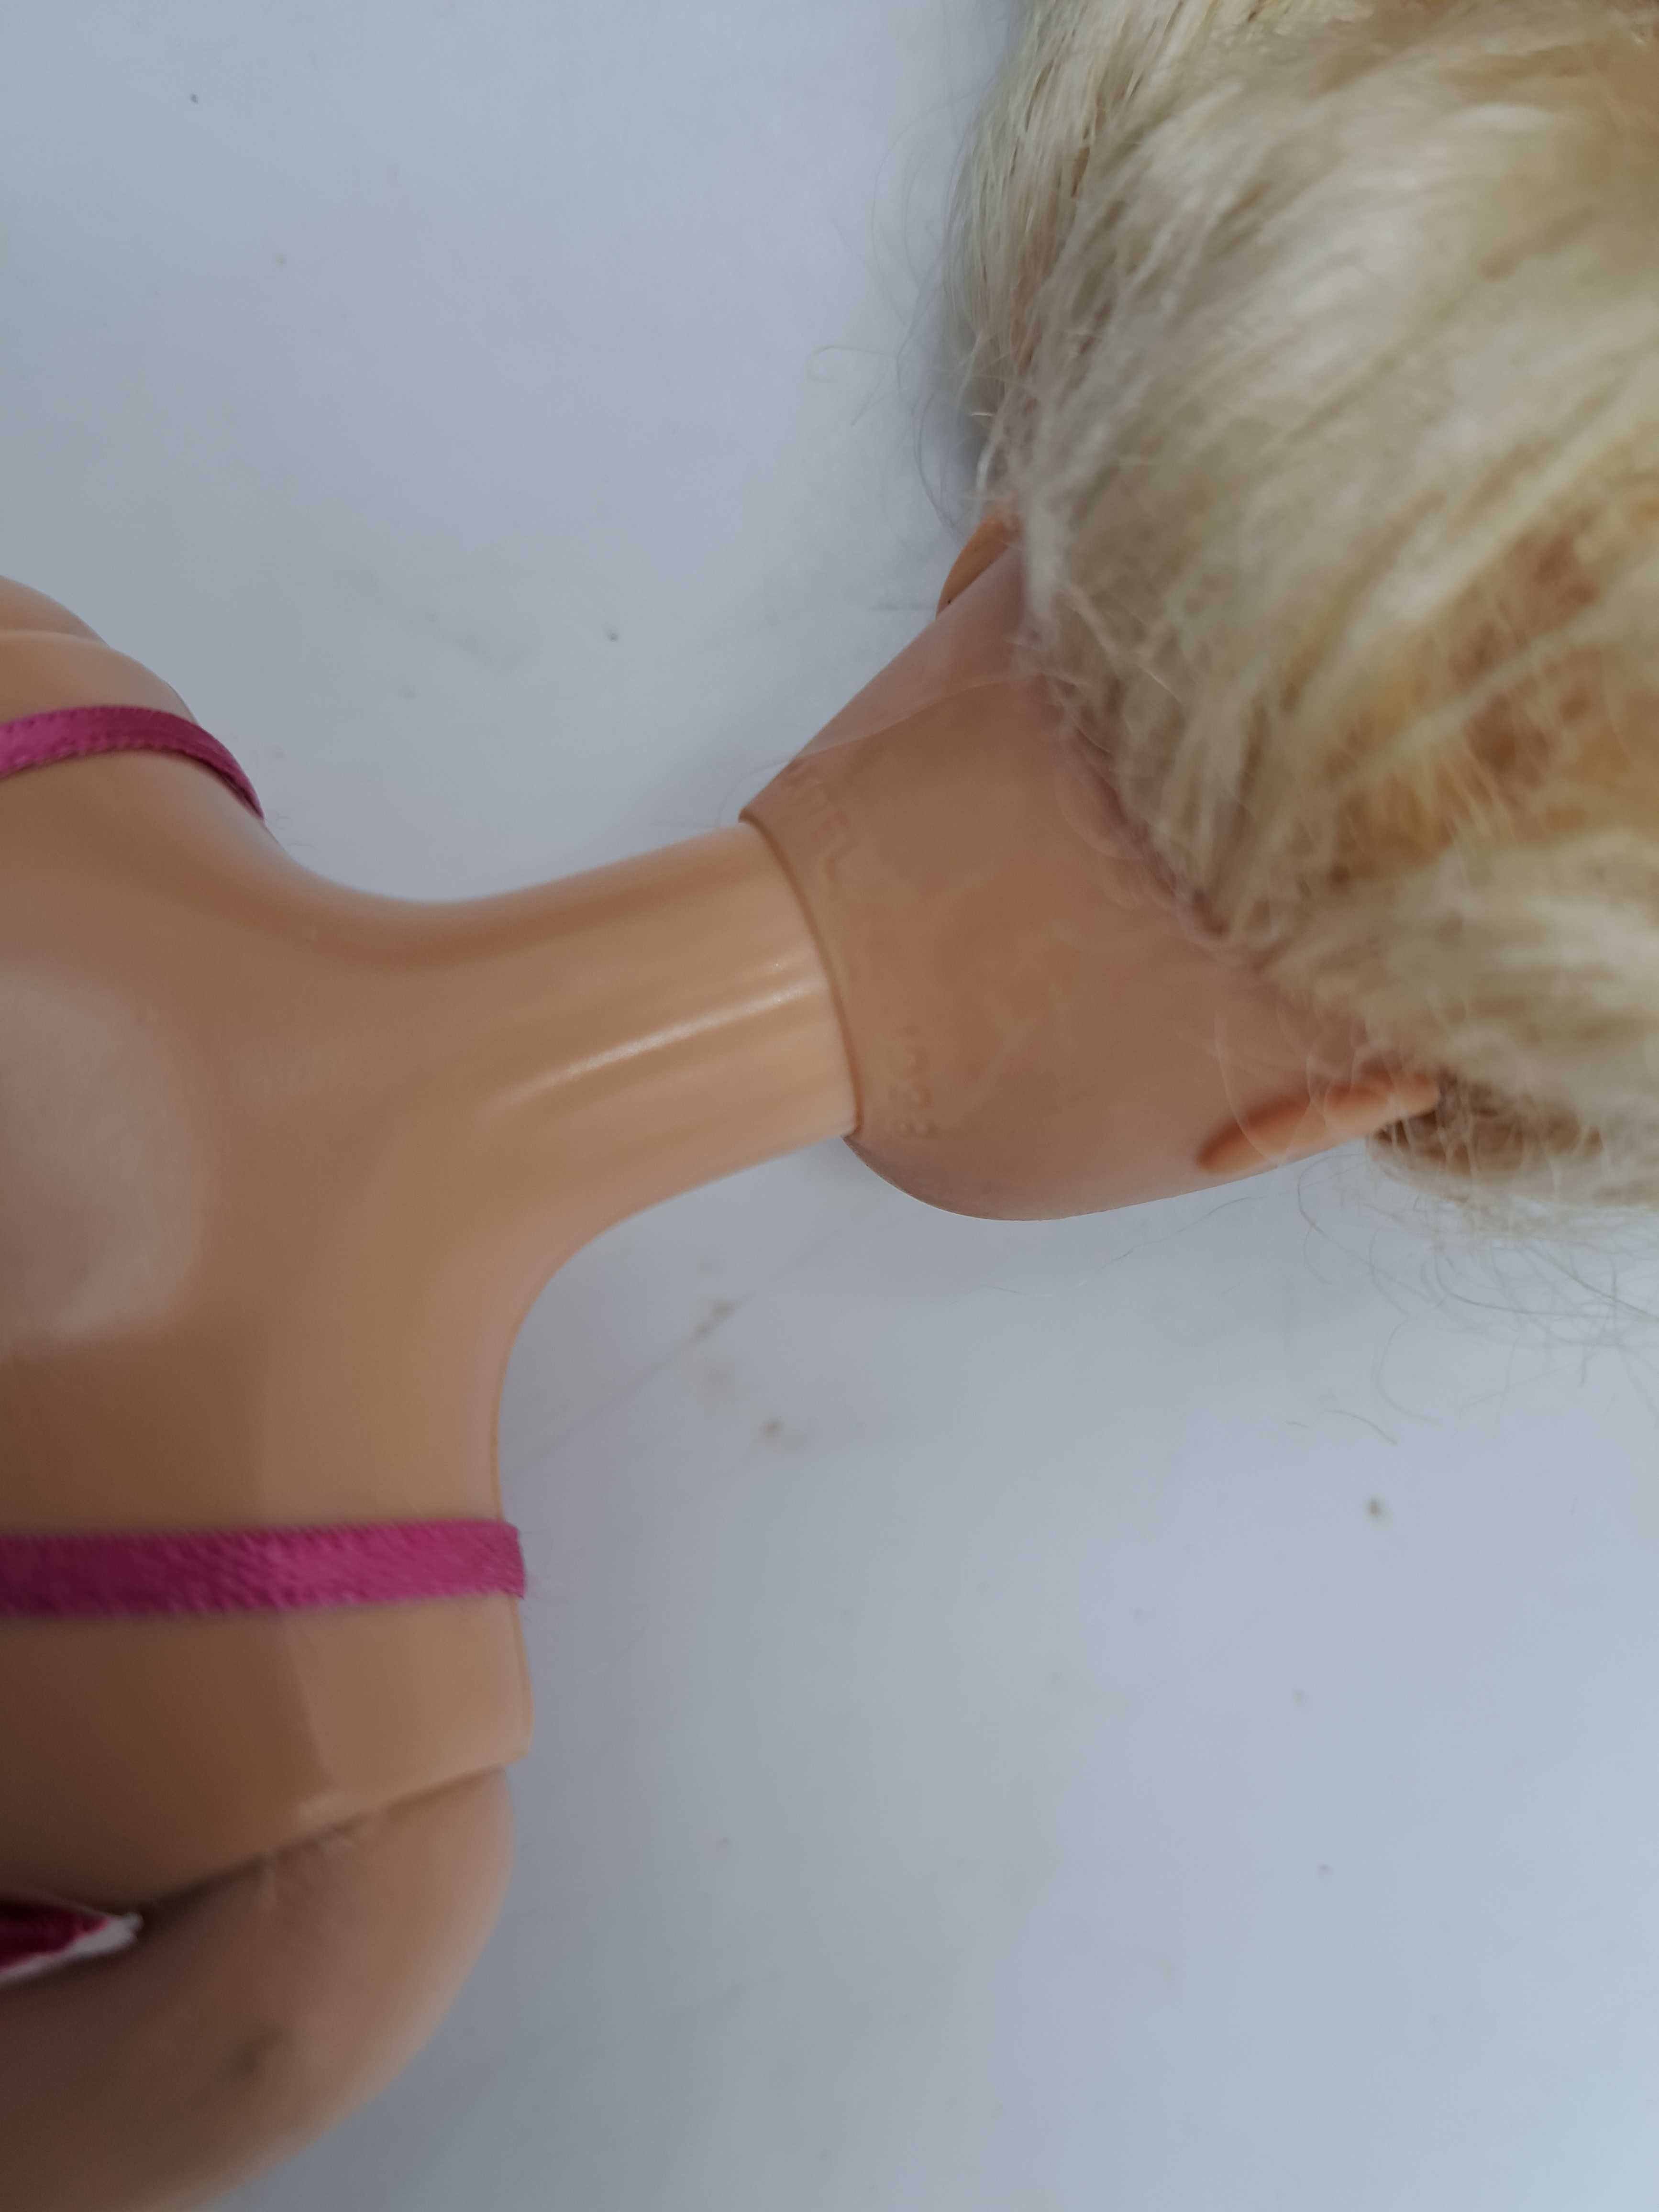 Lalka Barbie Mattel 1998 długie blond włosy, vintage